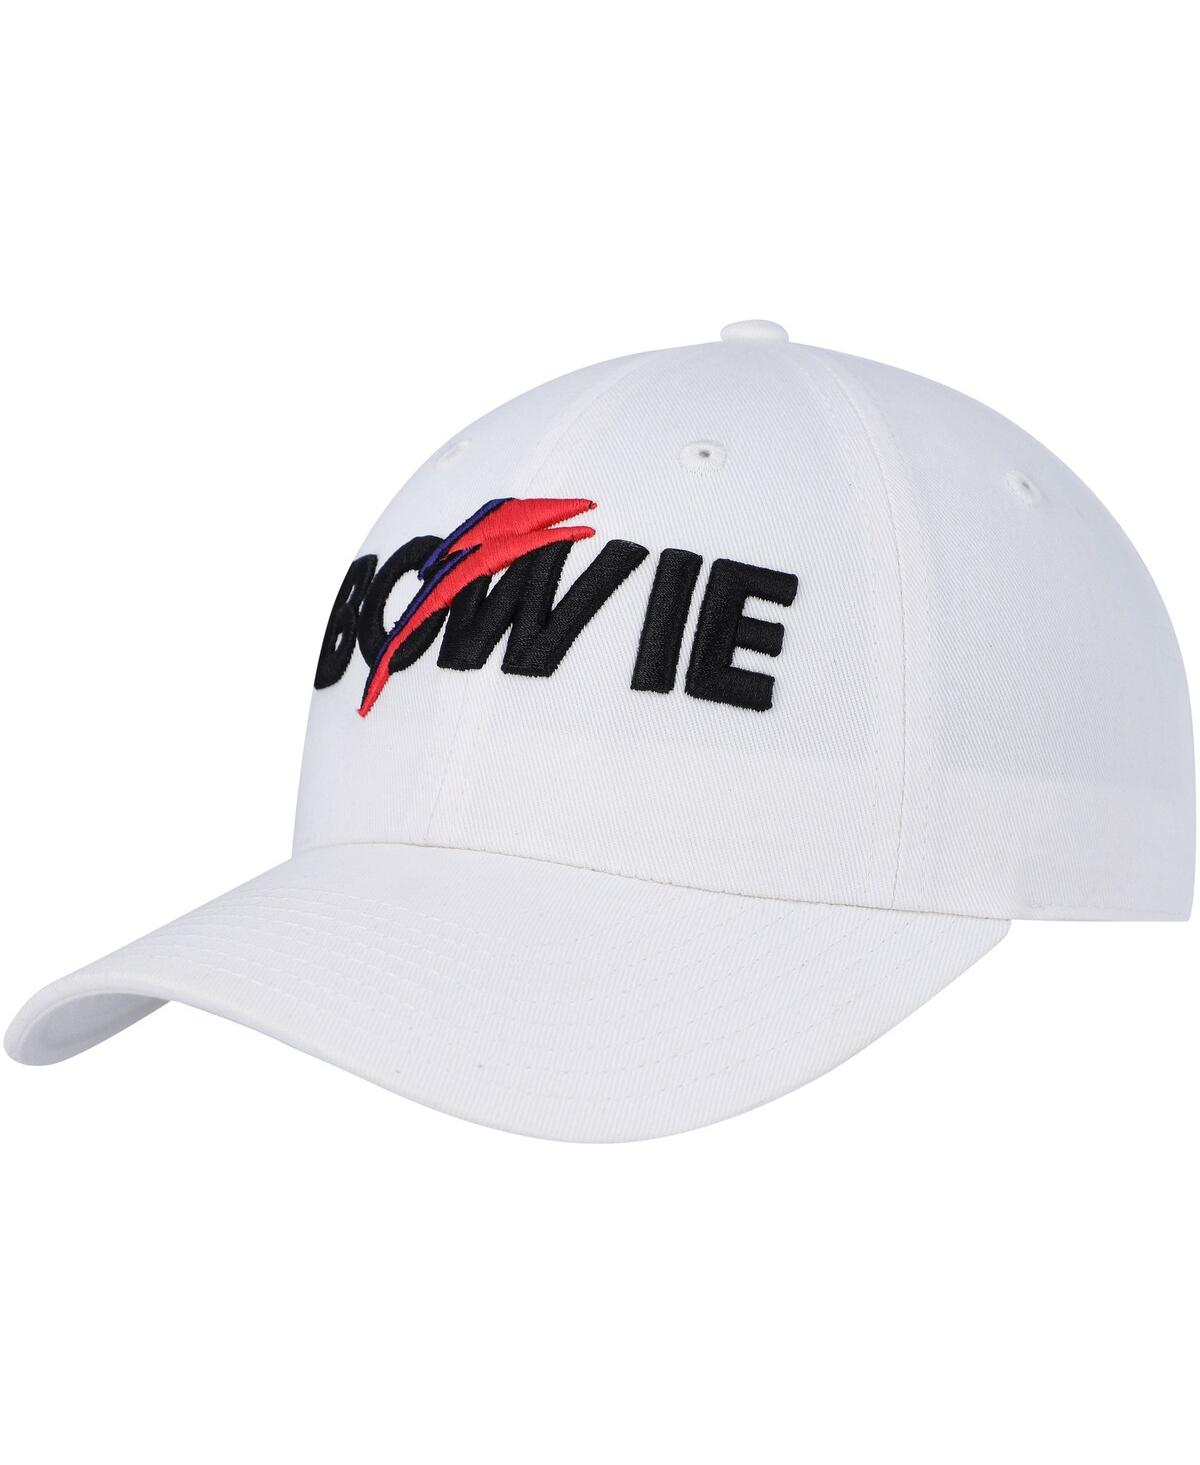 Men's American Needle White David Bowie Ballpark Adjustable Hat - White